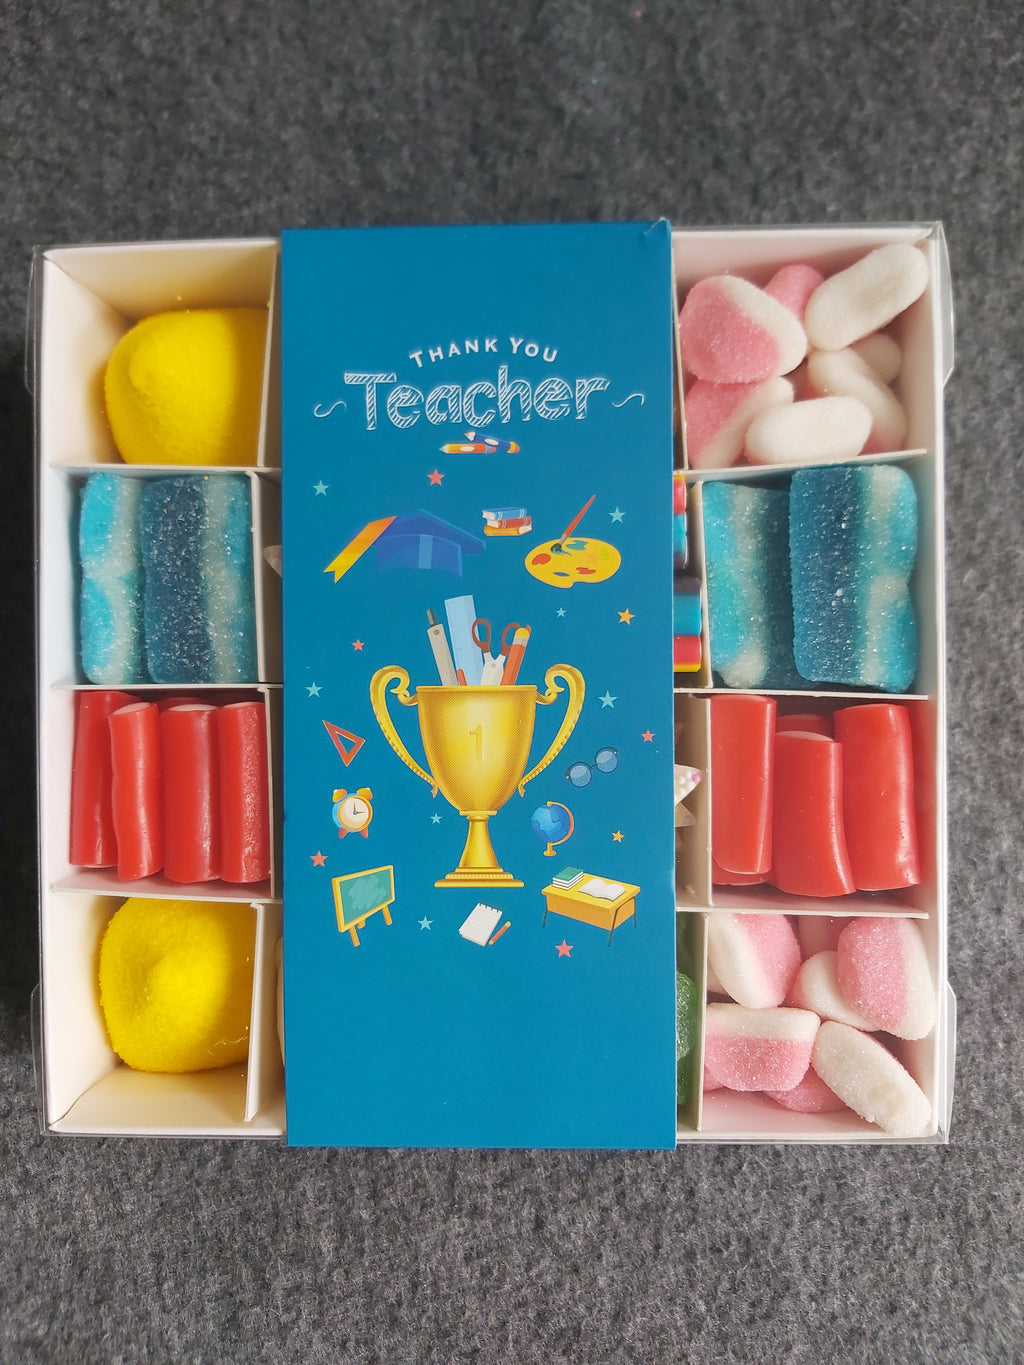 Thank You Teacher Sweets Selection Box